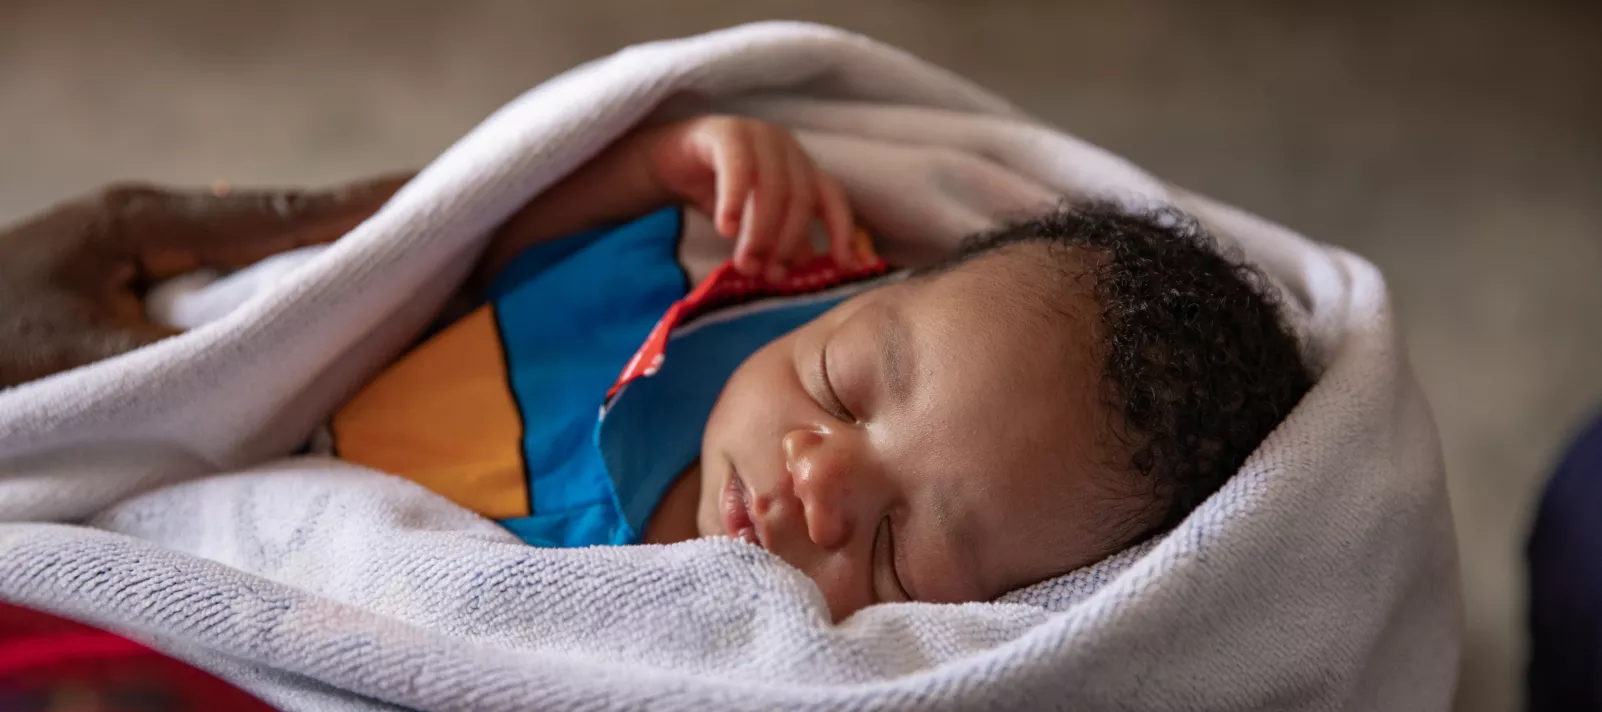 Pépé, 1 week old, born in the health center of the convergence commune of Kobéla, in the arms of his mother, Nzérékoré region in Guinea. 